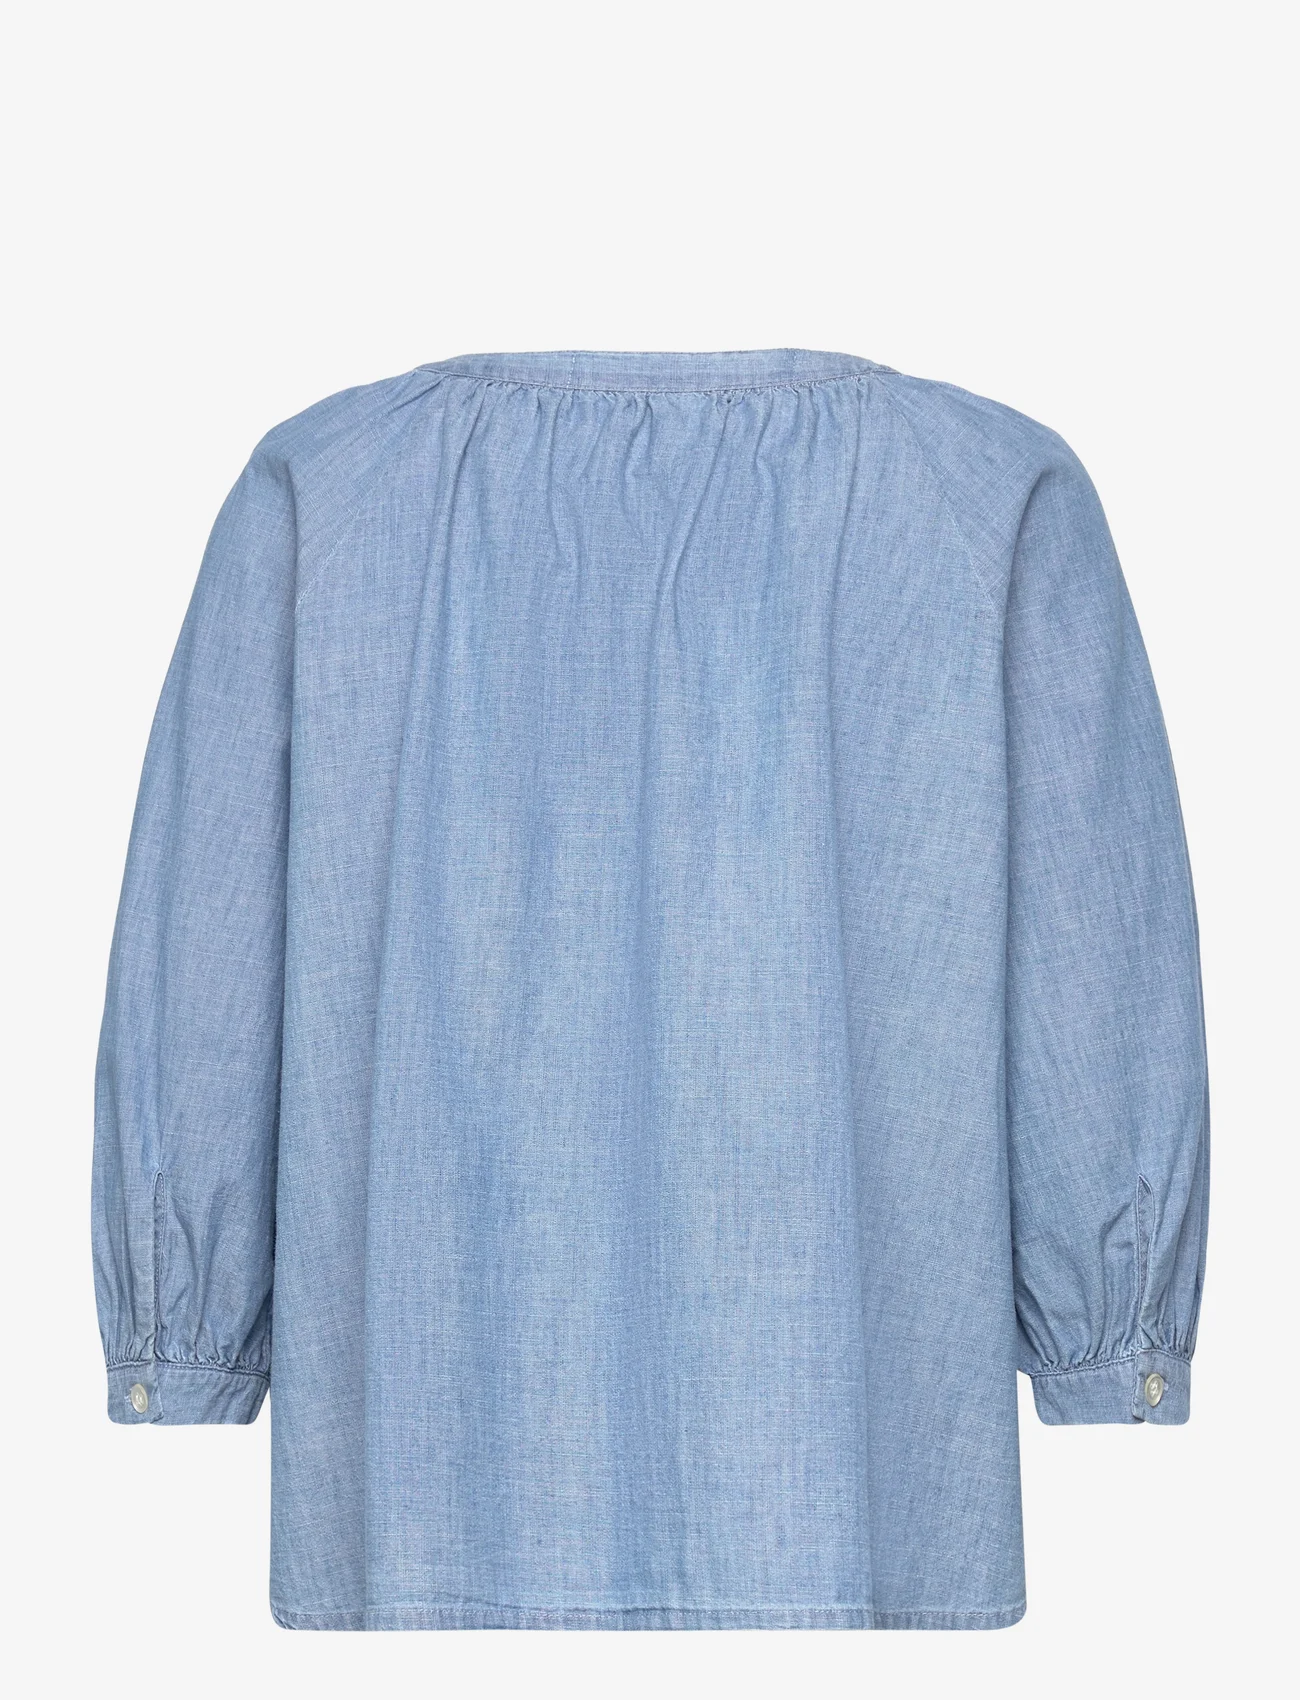 Pieszak - PD-Lola Lonnie Boheme Shirt Fine De - denimskjorter - denim blue - 1